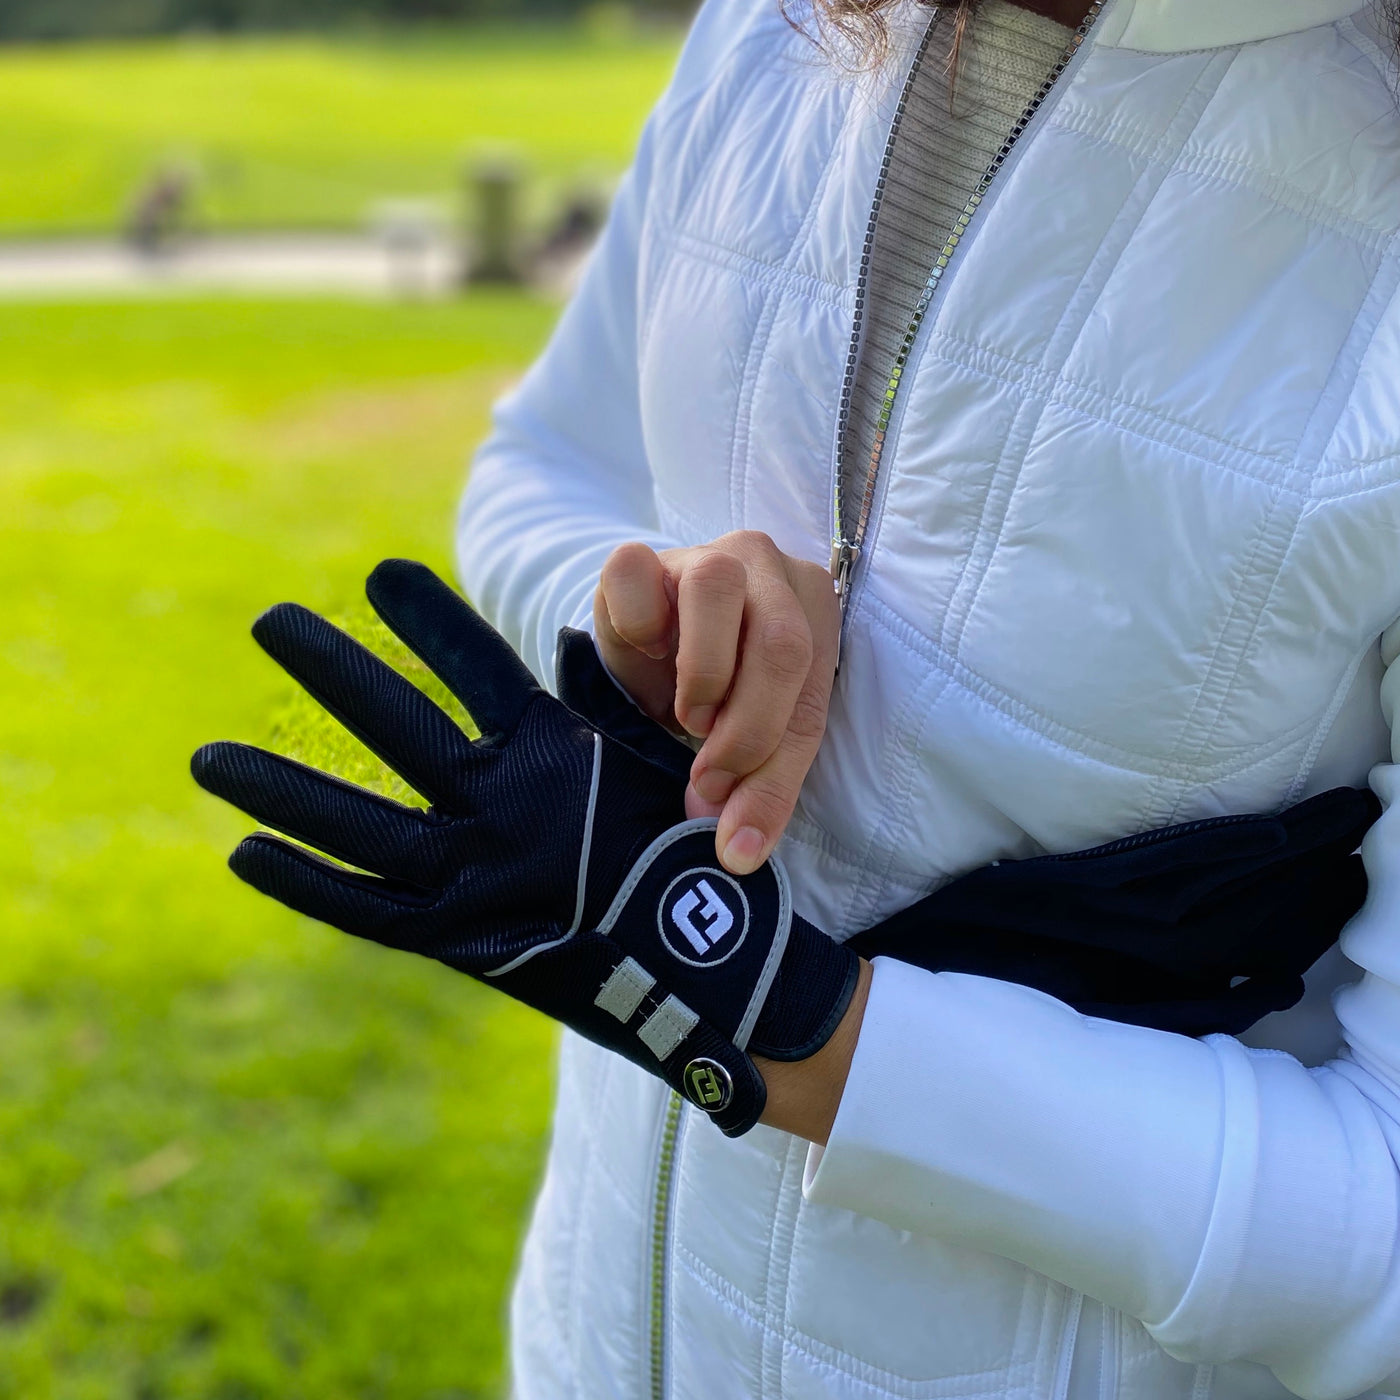 Golfers wearing weather gear on golf course